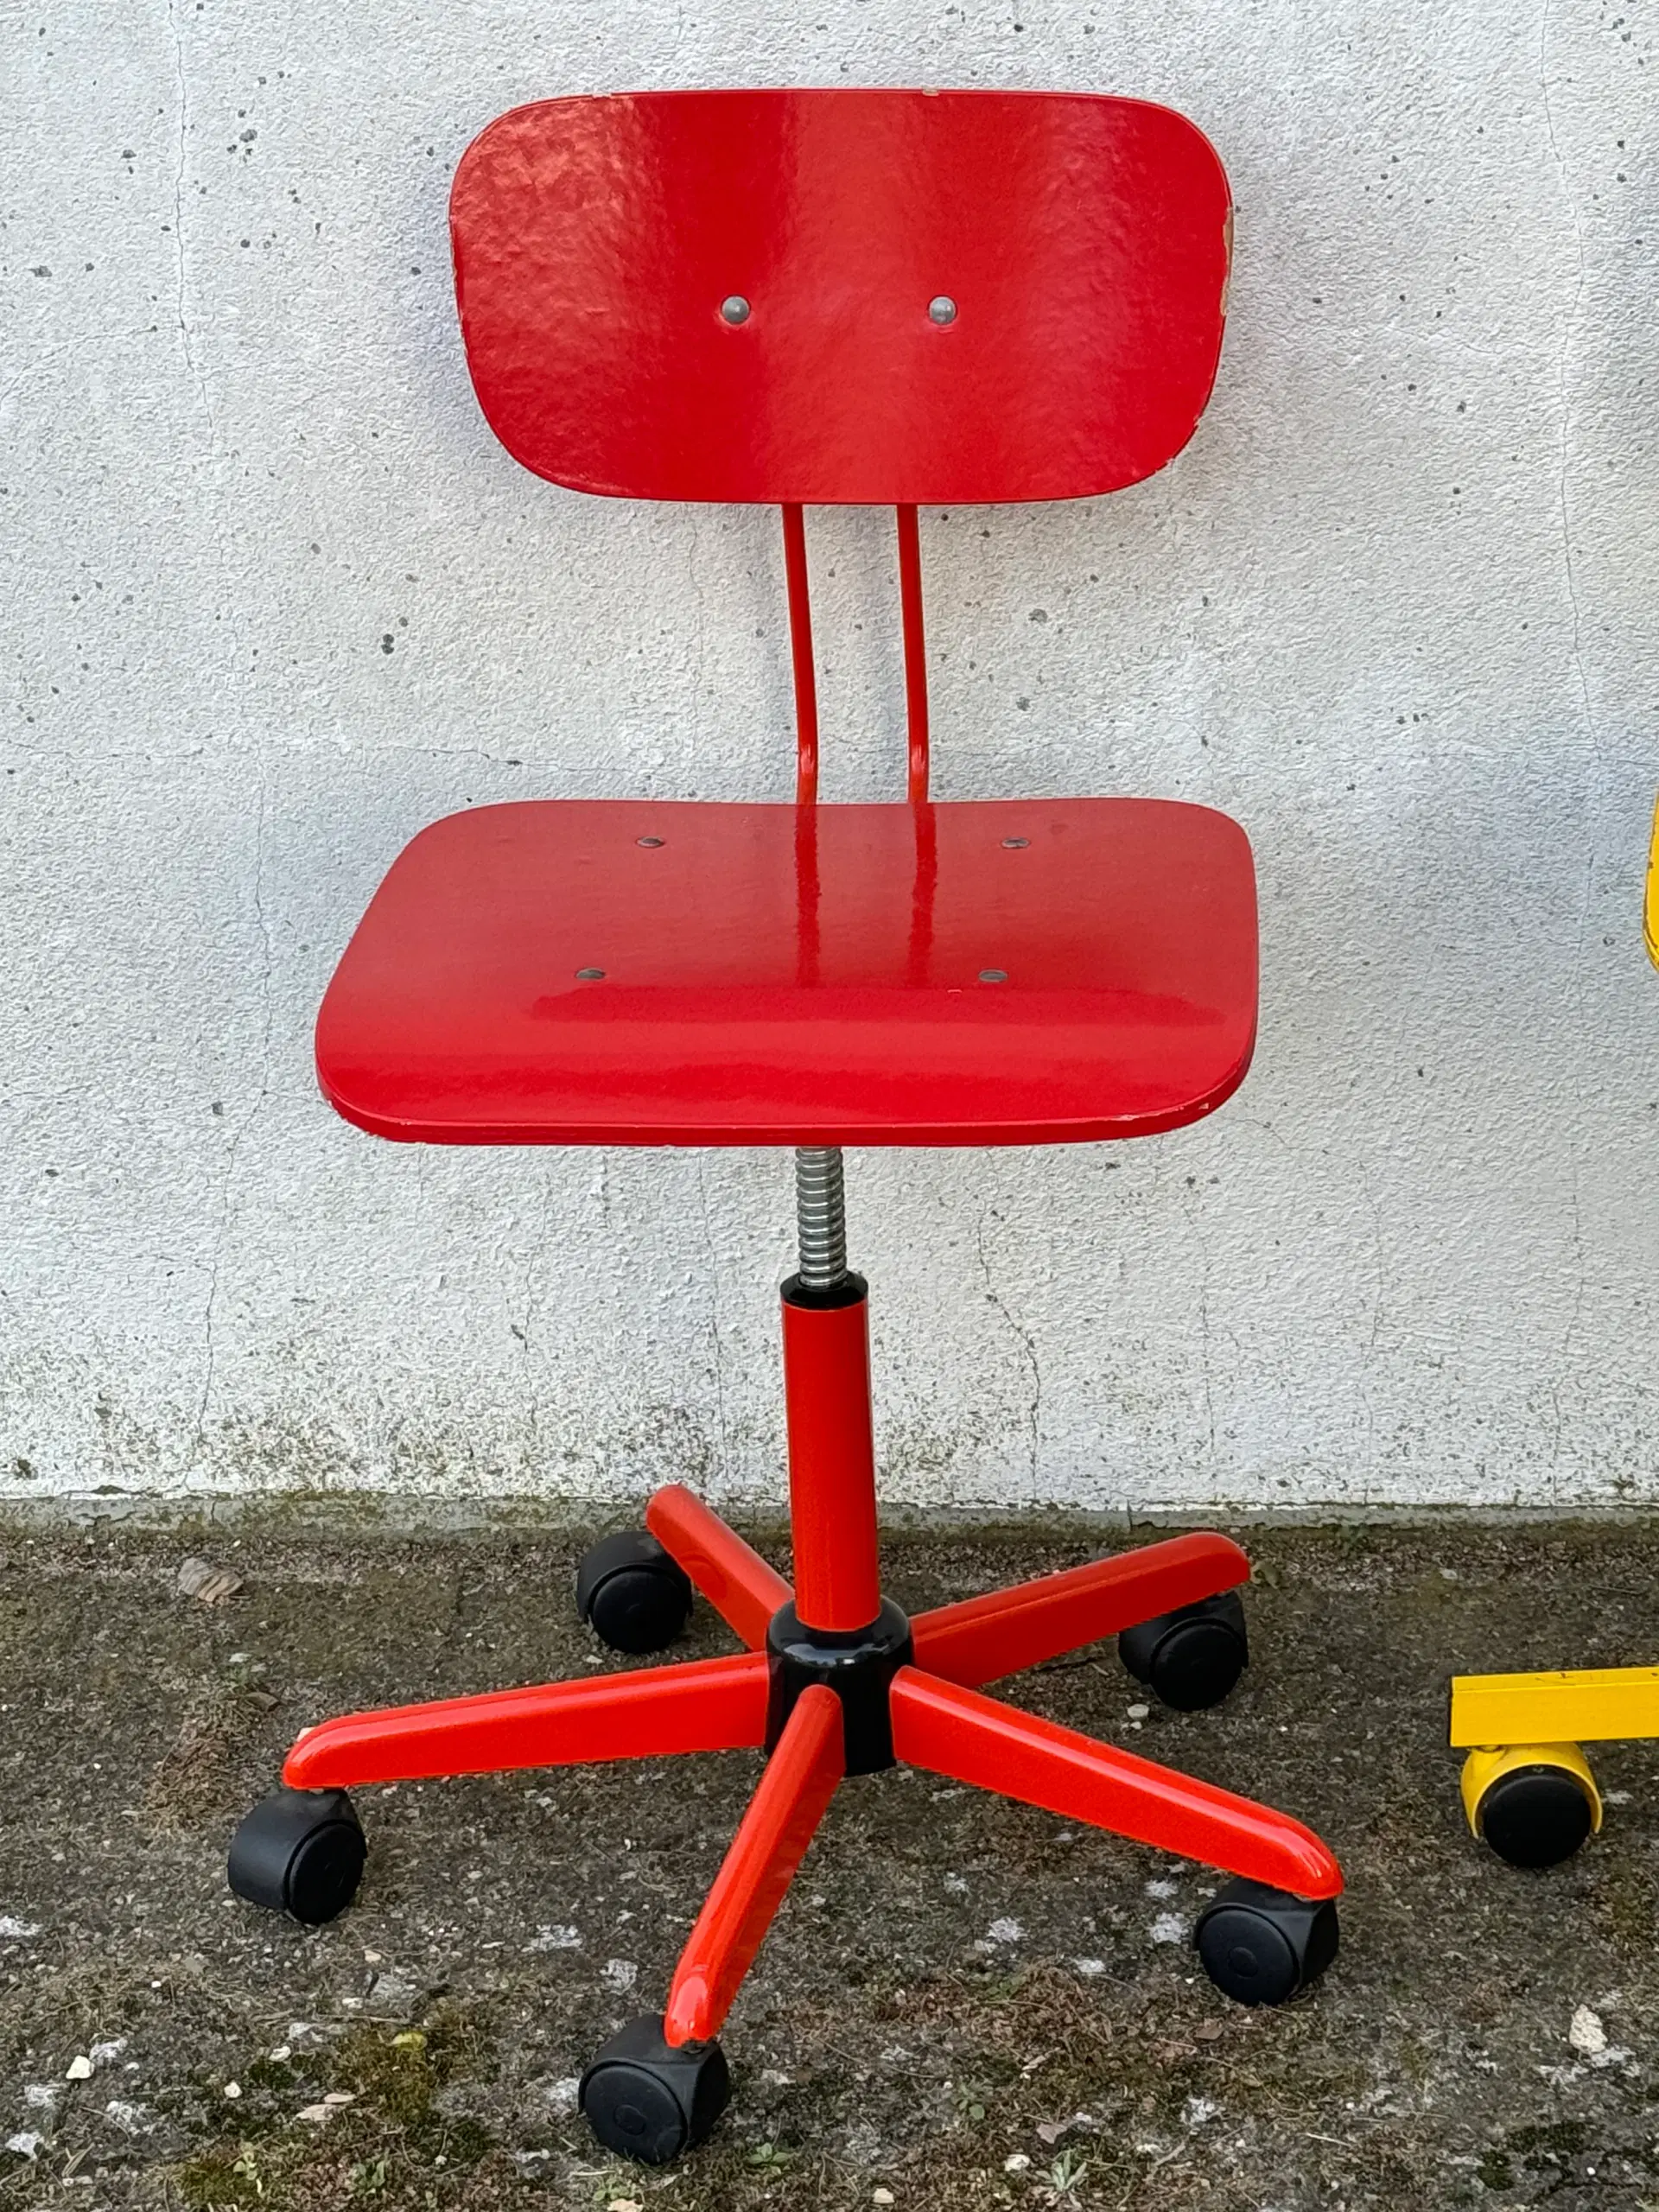 Rød og gul retro kontorstole